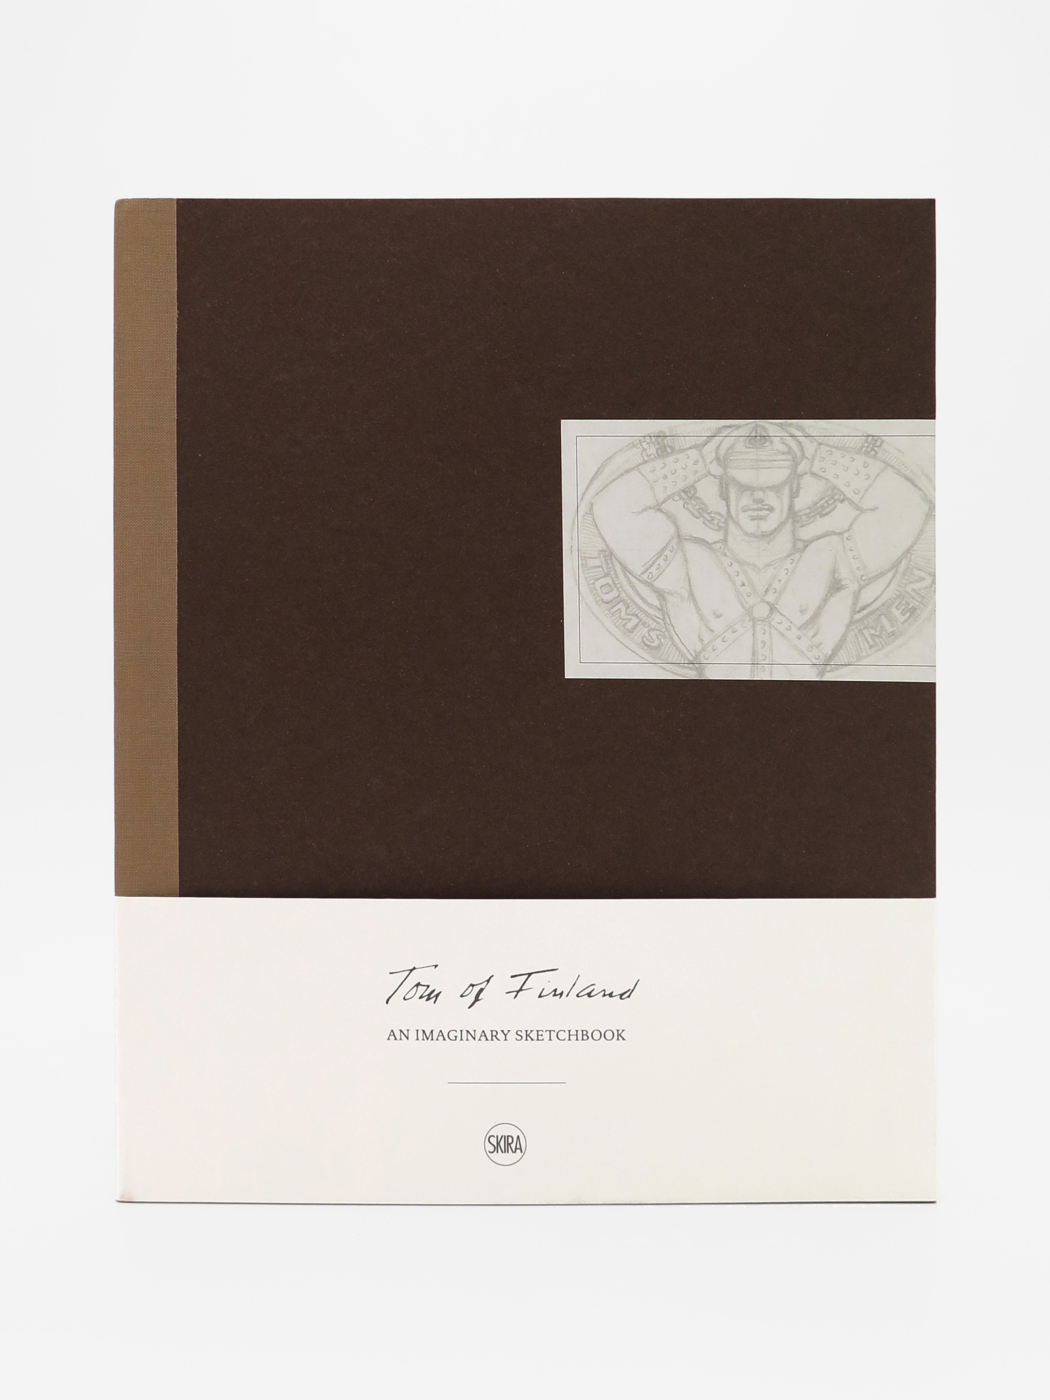 Tom of Finland, An Imaginary Sketchbook